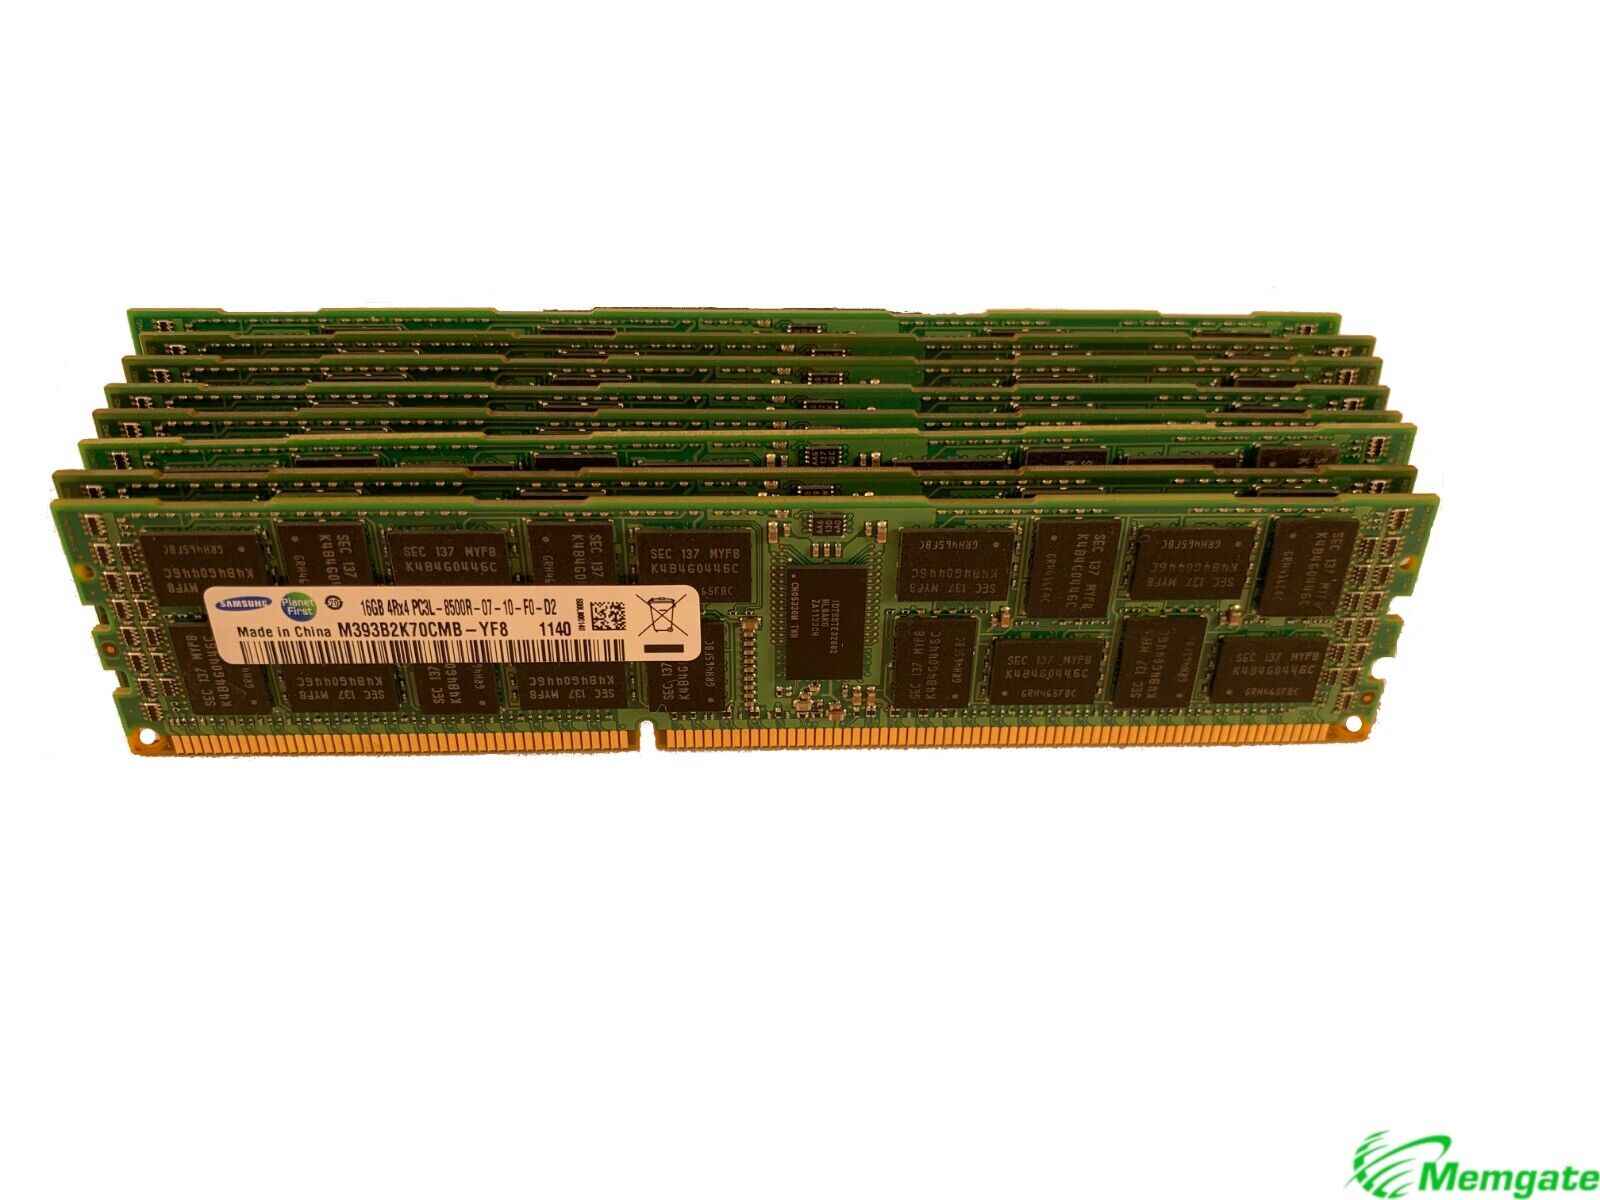 96GB (6 x 16GB) DDR3 PC3-8500R 4Rx4 ECC Server Memory RAM Dell Precision T7500